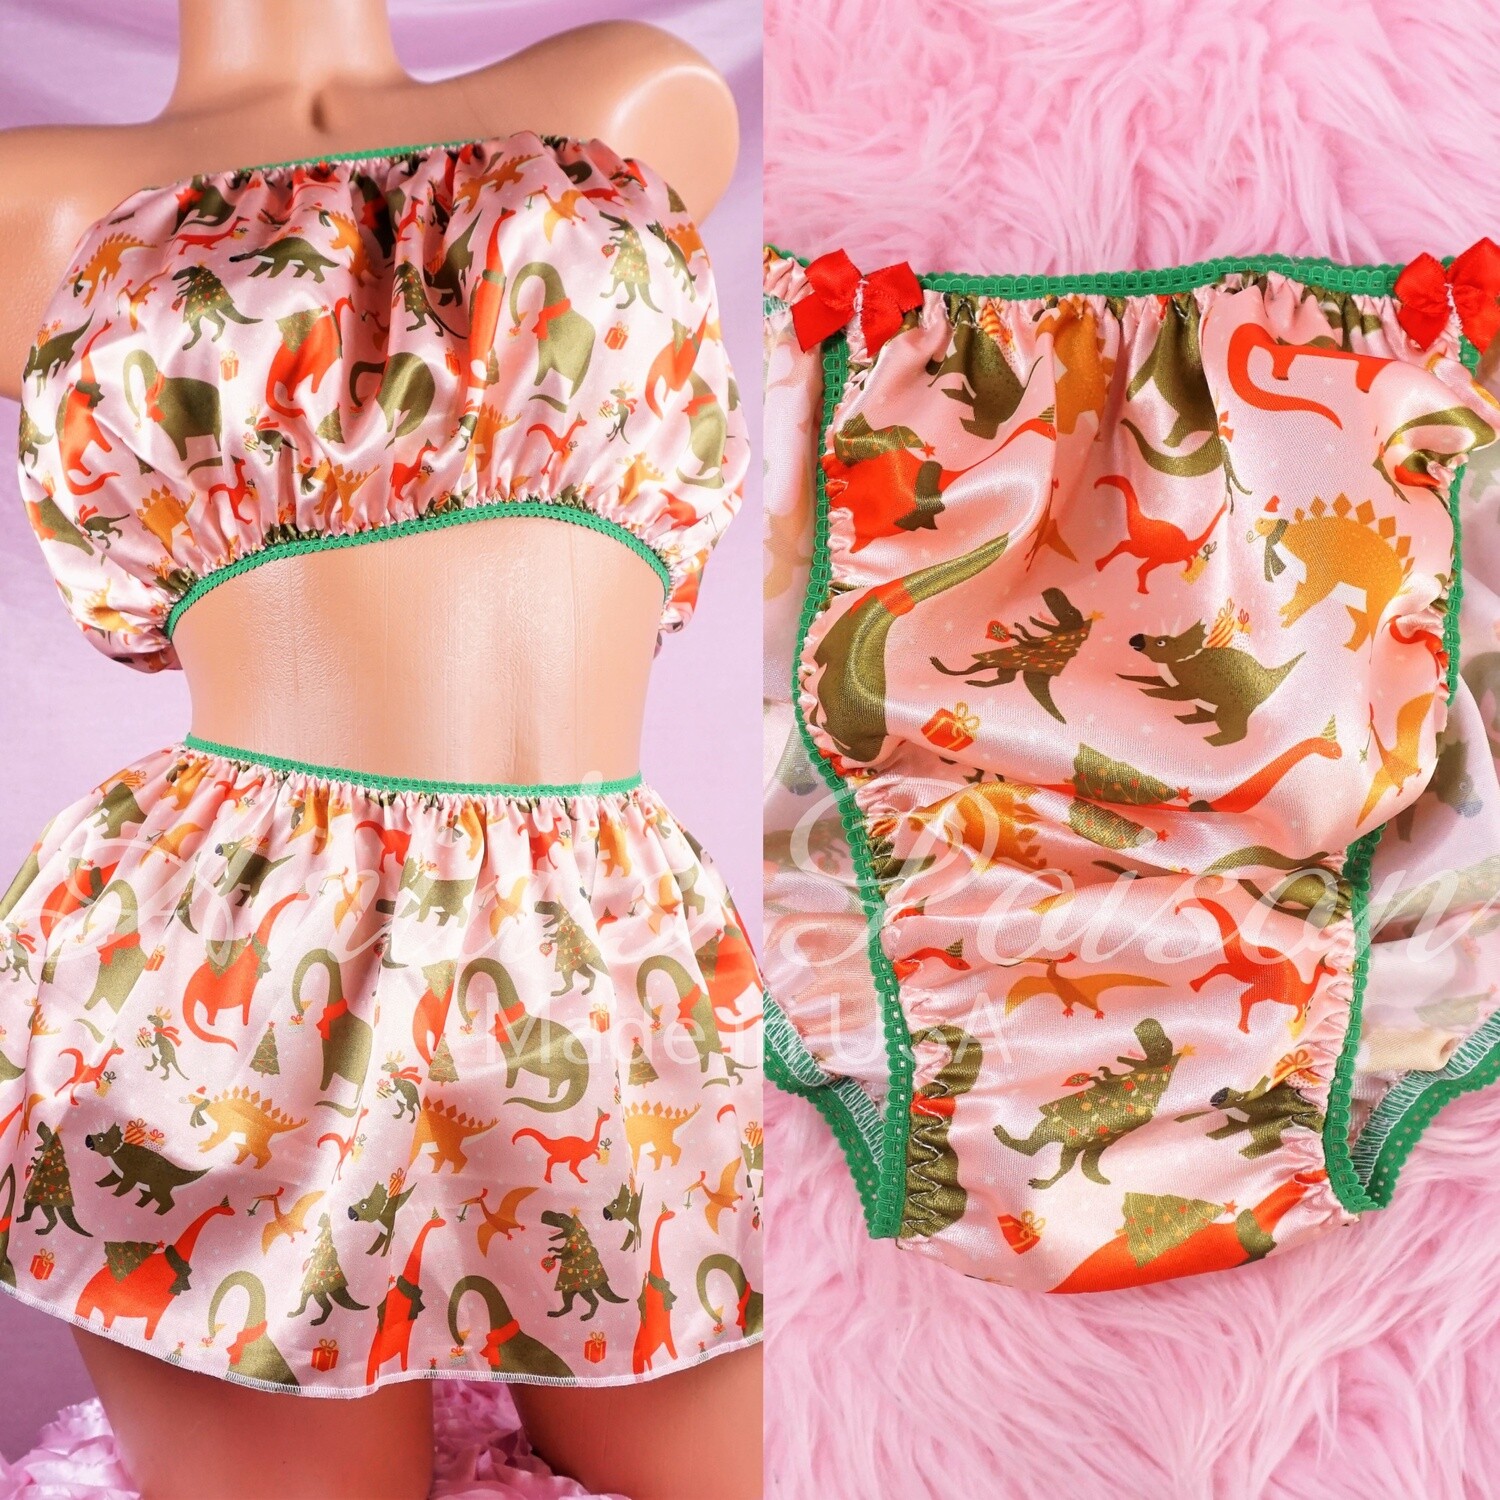 Ania's Poison Christmas Dino Panties 100% polyester silky soft string bikini sissy mens underwear novelty print panties